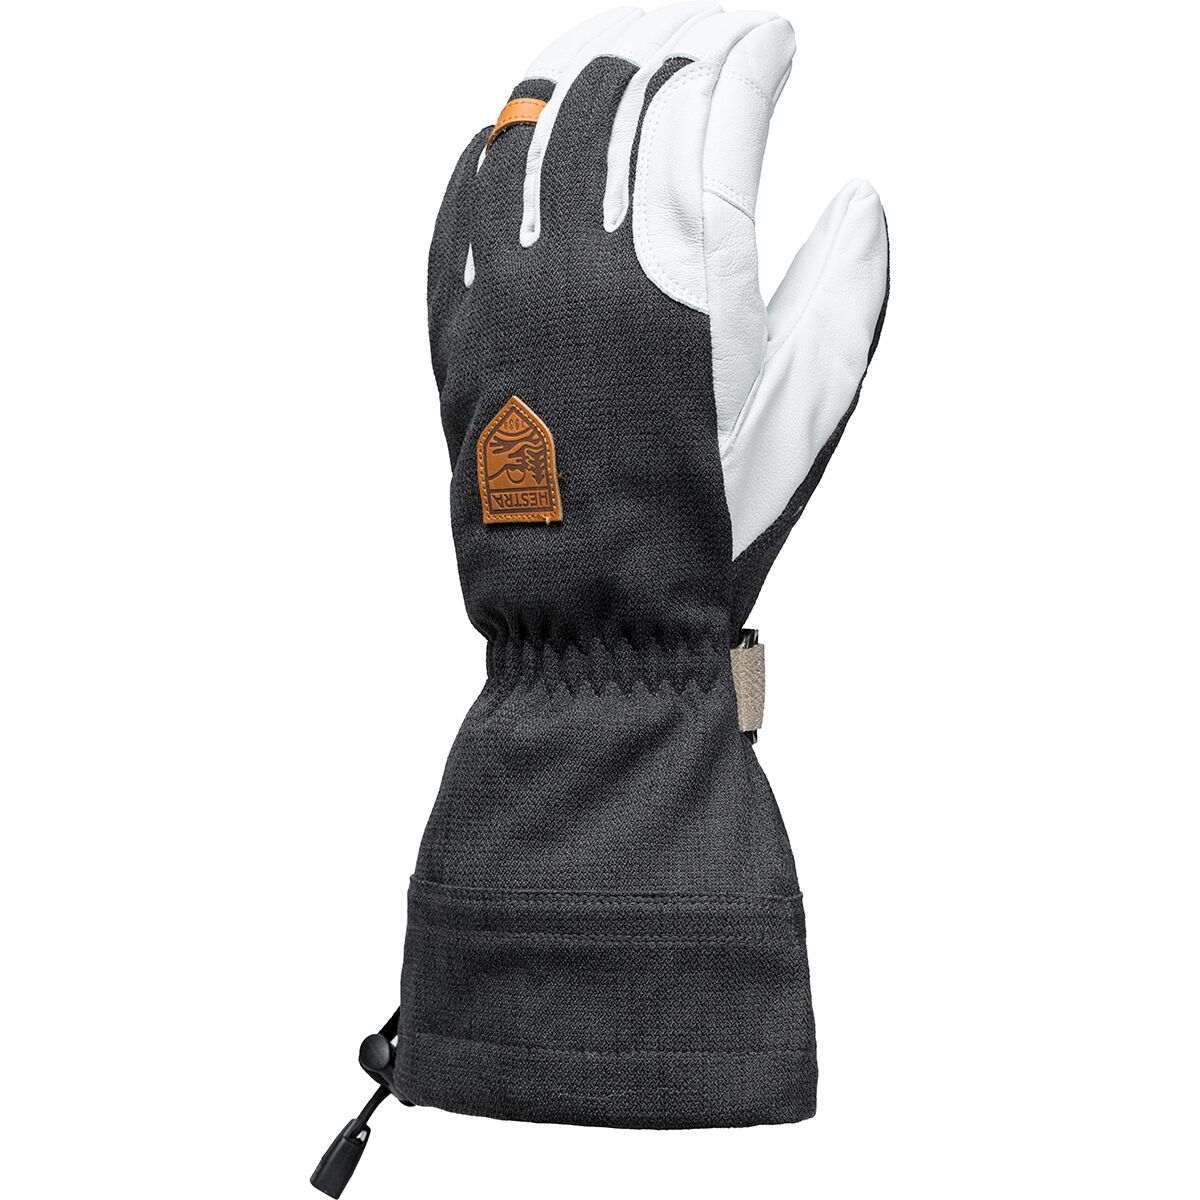 Hestra Army Leather Patrol Gauntlet Glove